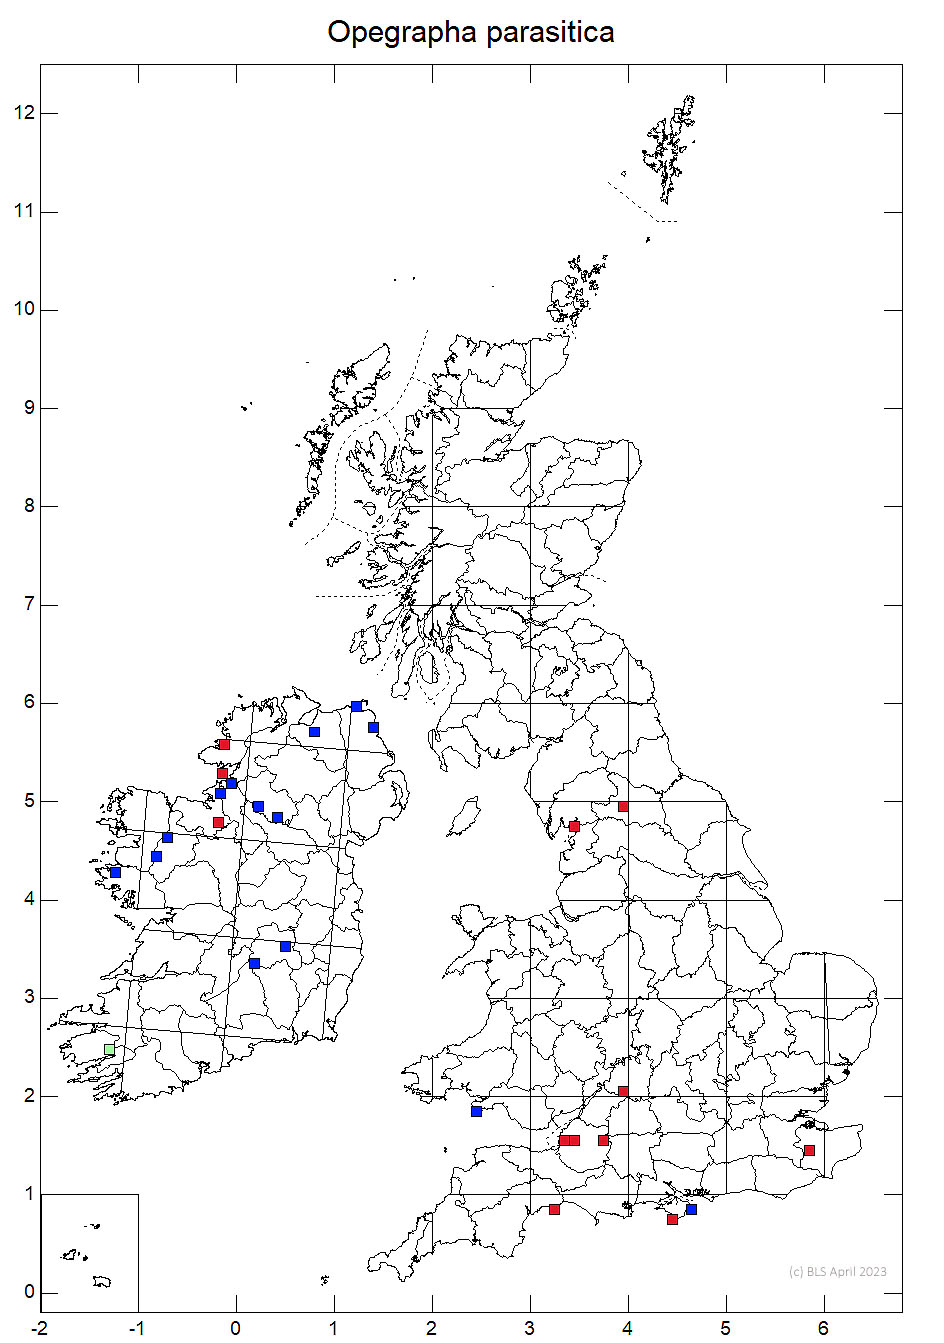 Opegrapha parasitica 10km sq distribution map